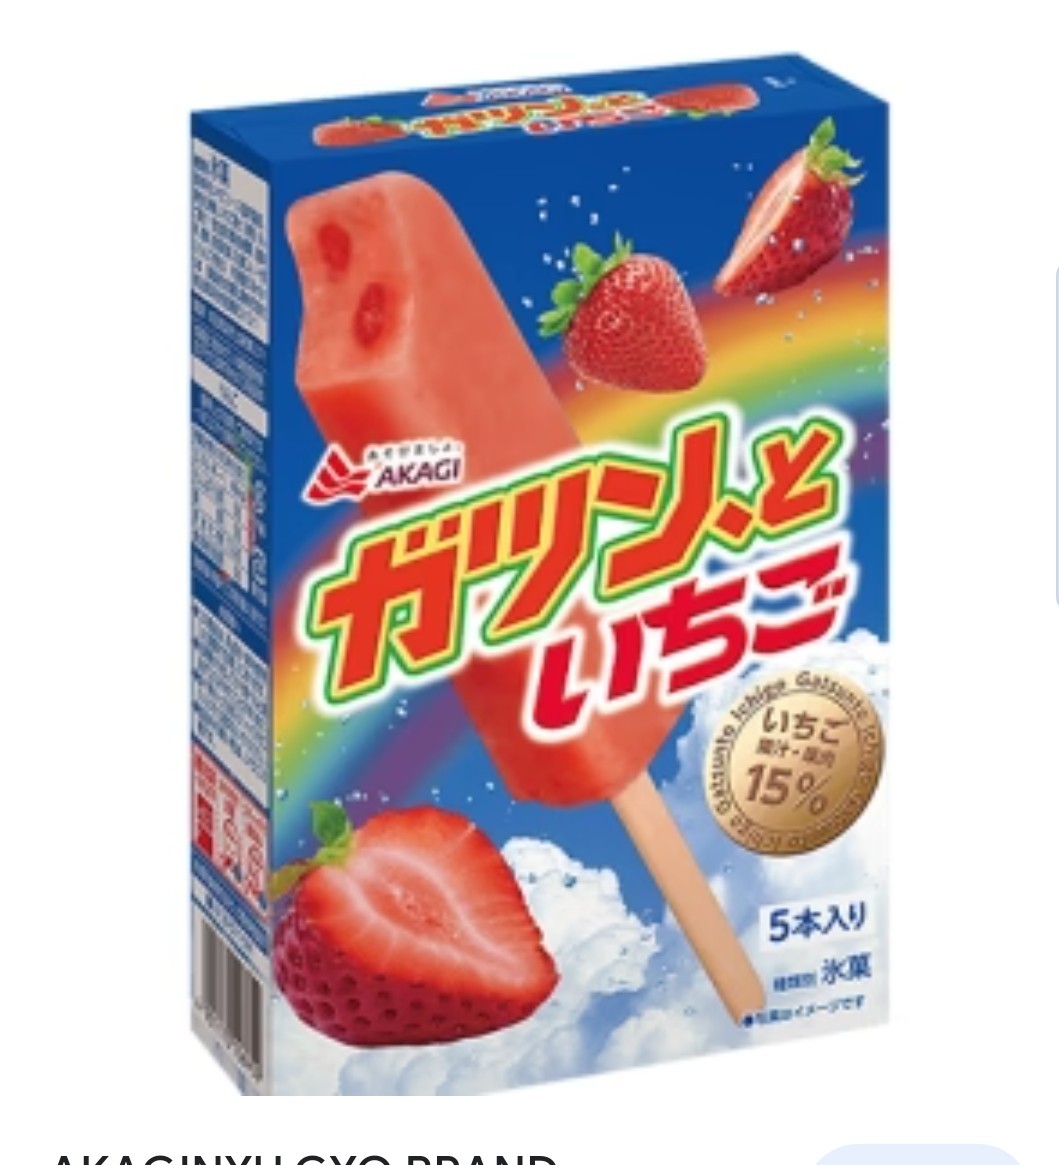 akagi-strawberry-ice-bar